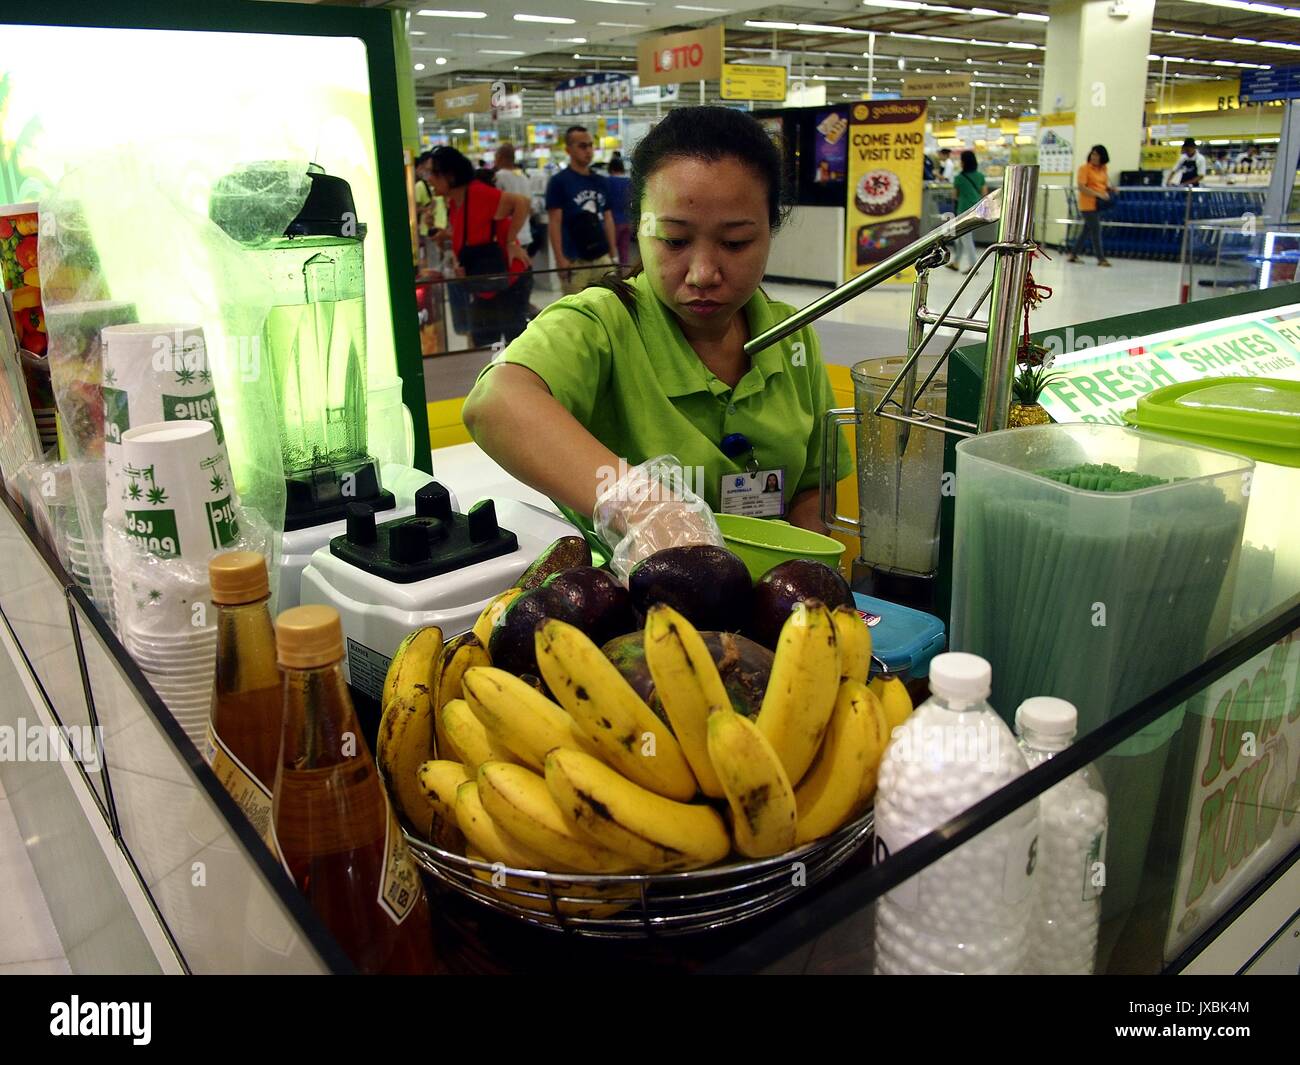 ANGONO, RIZAL, PHILIPPINES - AUGUST 12, 2017: Food kiosk employee prepares a fruit shake for a customer Stock Photo